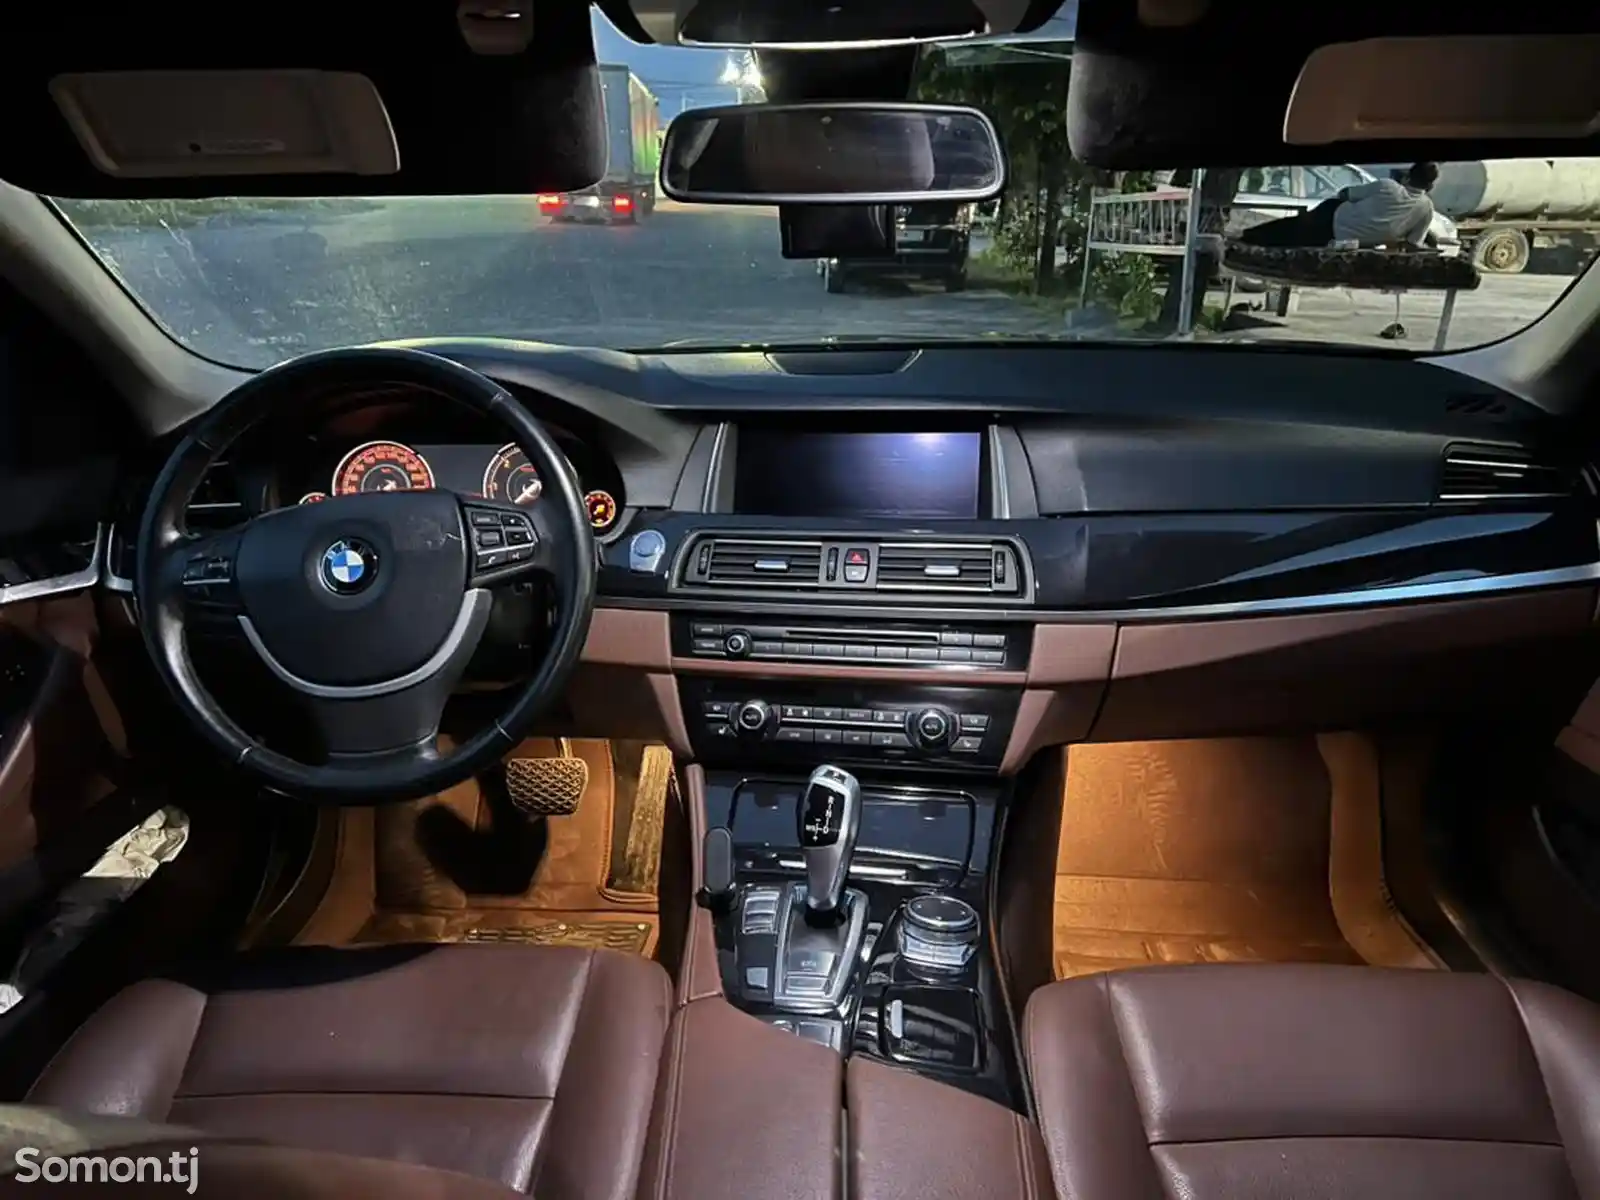 BMW 5 series, 2015-7